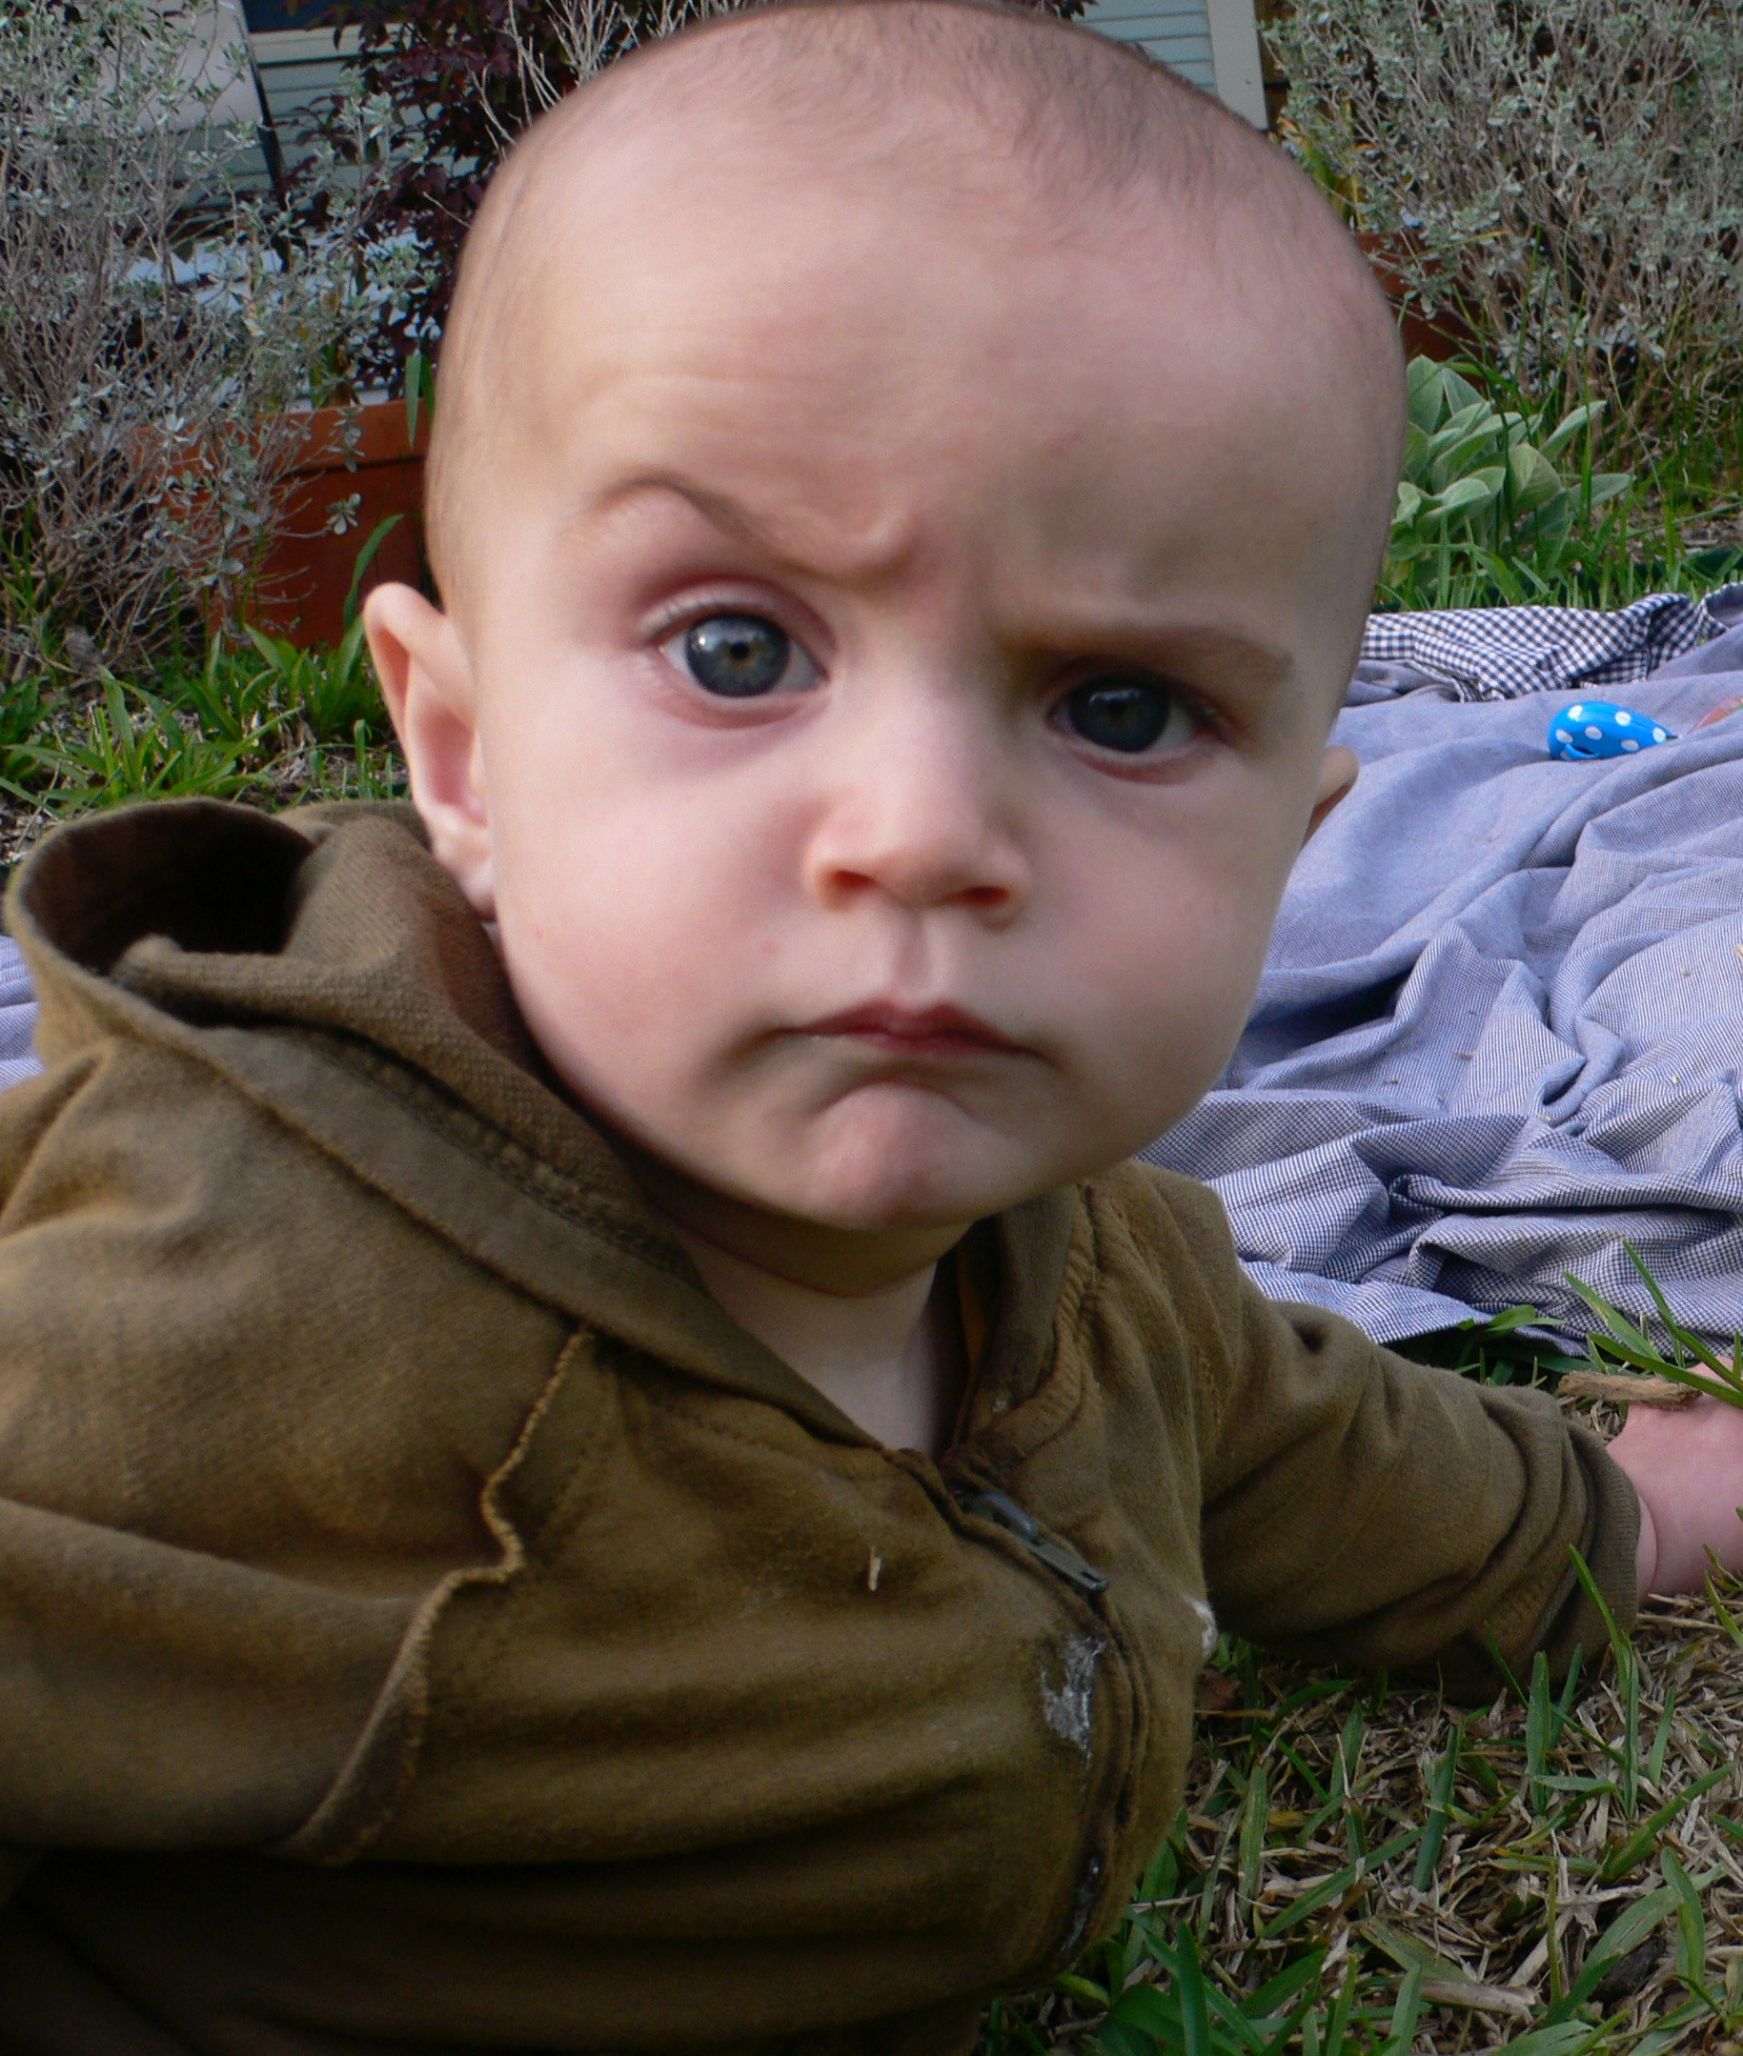 Meme Faces - Skeptical Baby